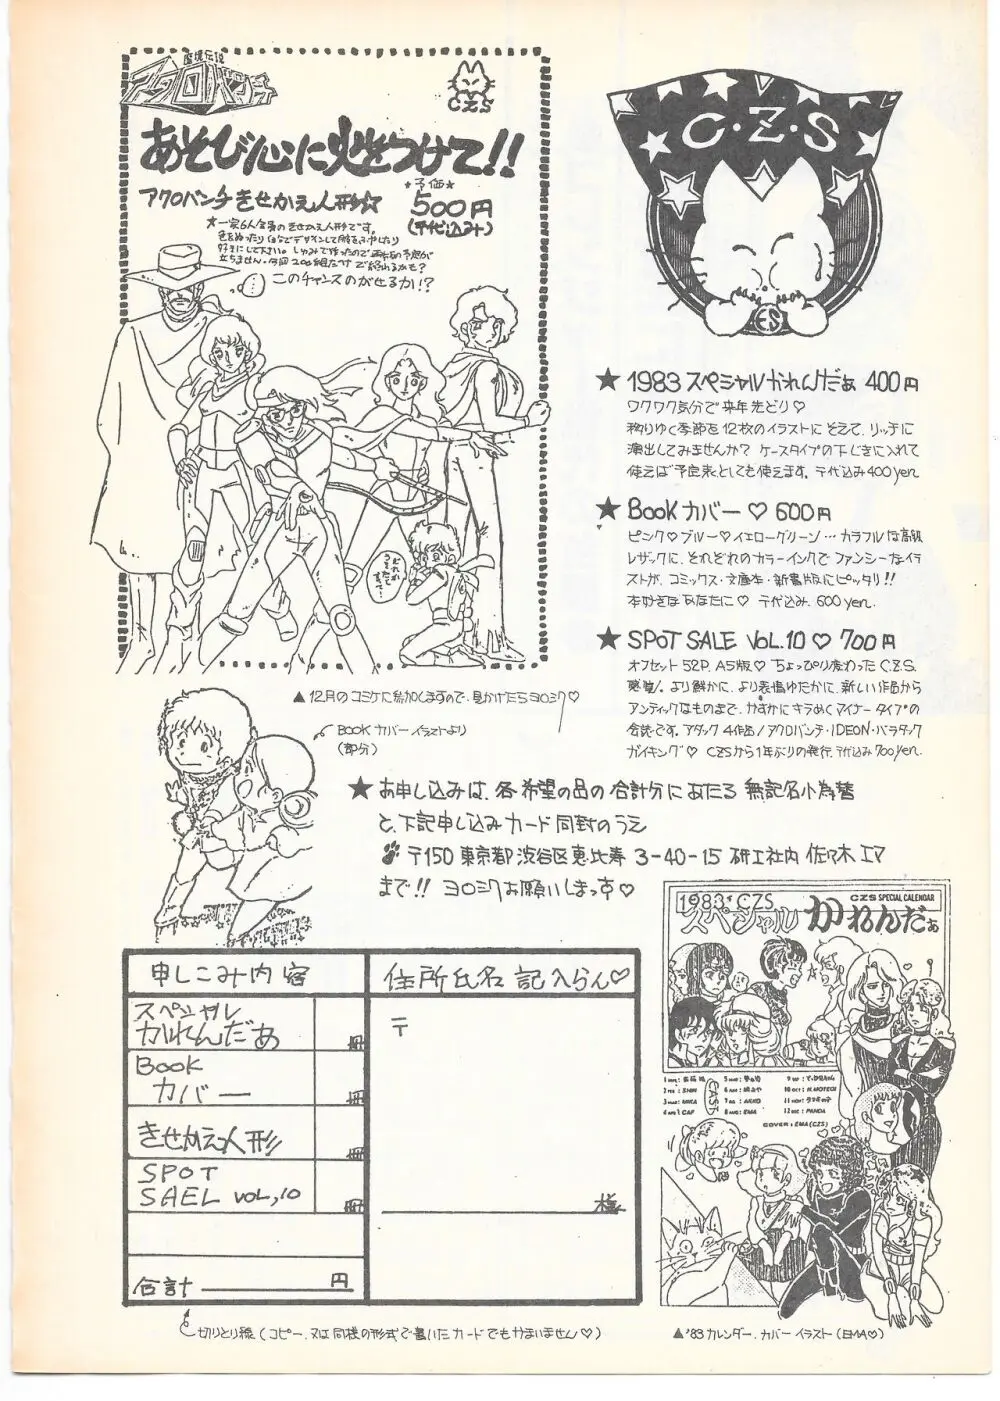 THE ANIMATOR 1 金田伊功特集号 - page135